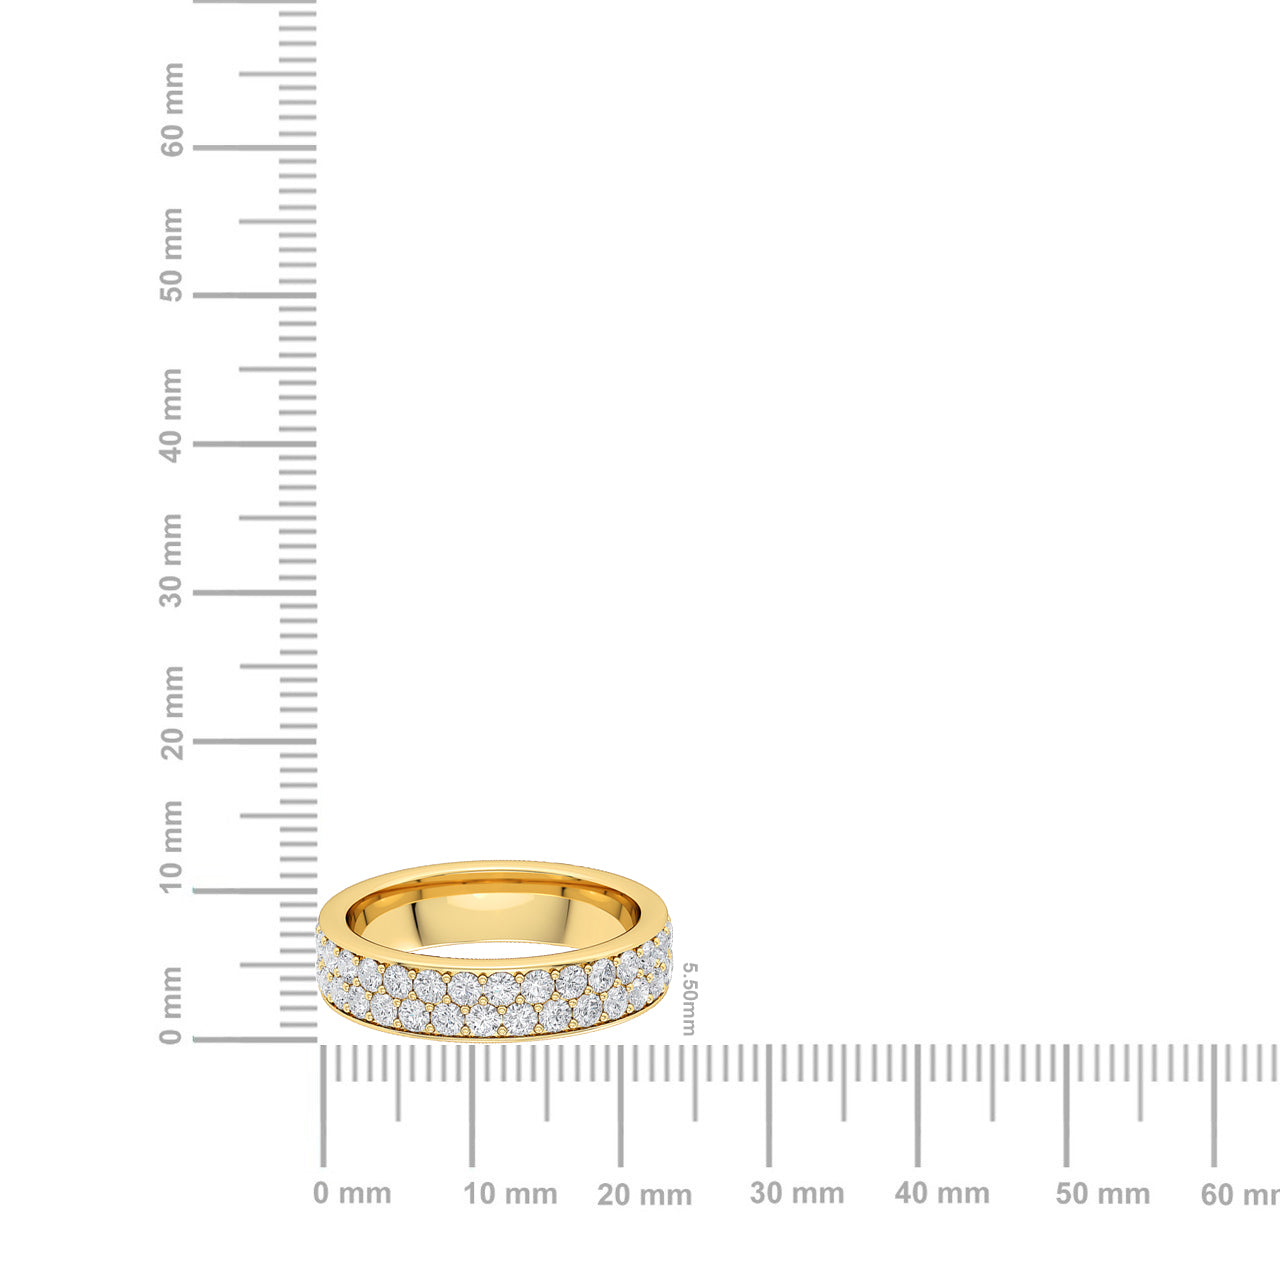 Certified 14K Gold 2.1ct Natural Diamond Full Eternity Multi Row Wedding Band   Ring